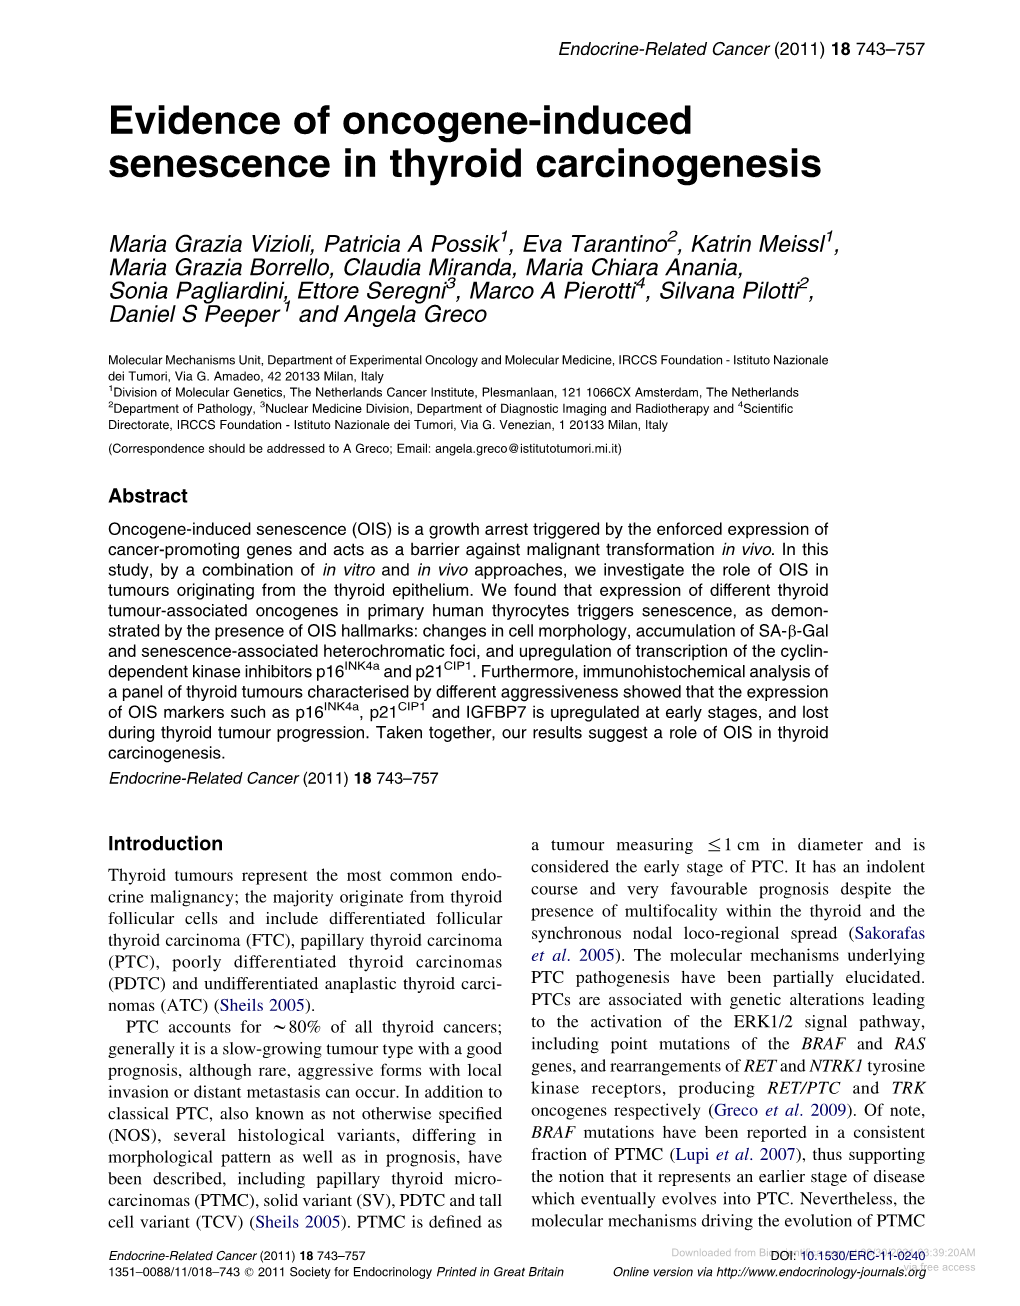 Evidence of Oncogene-Induced Senescence in Thyroid Carcinogenesis